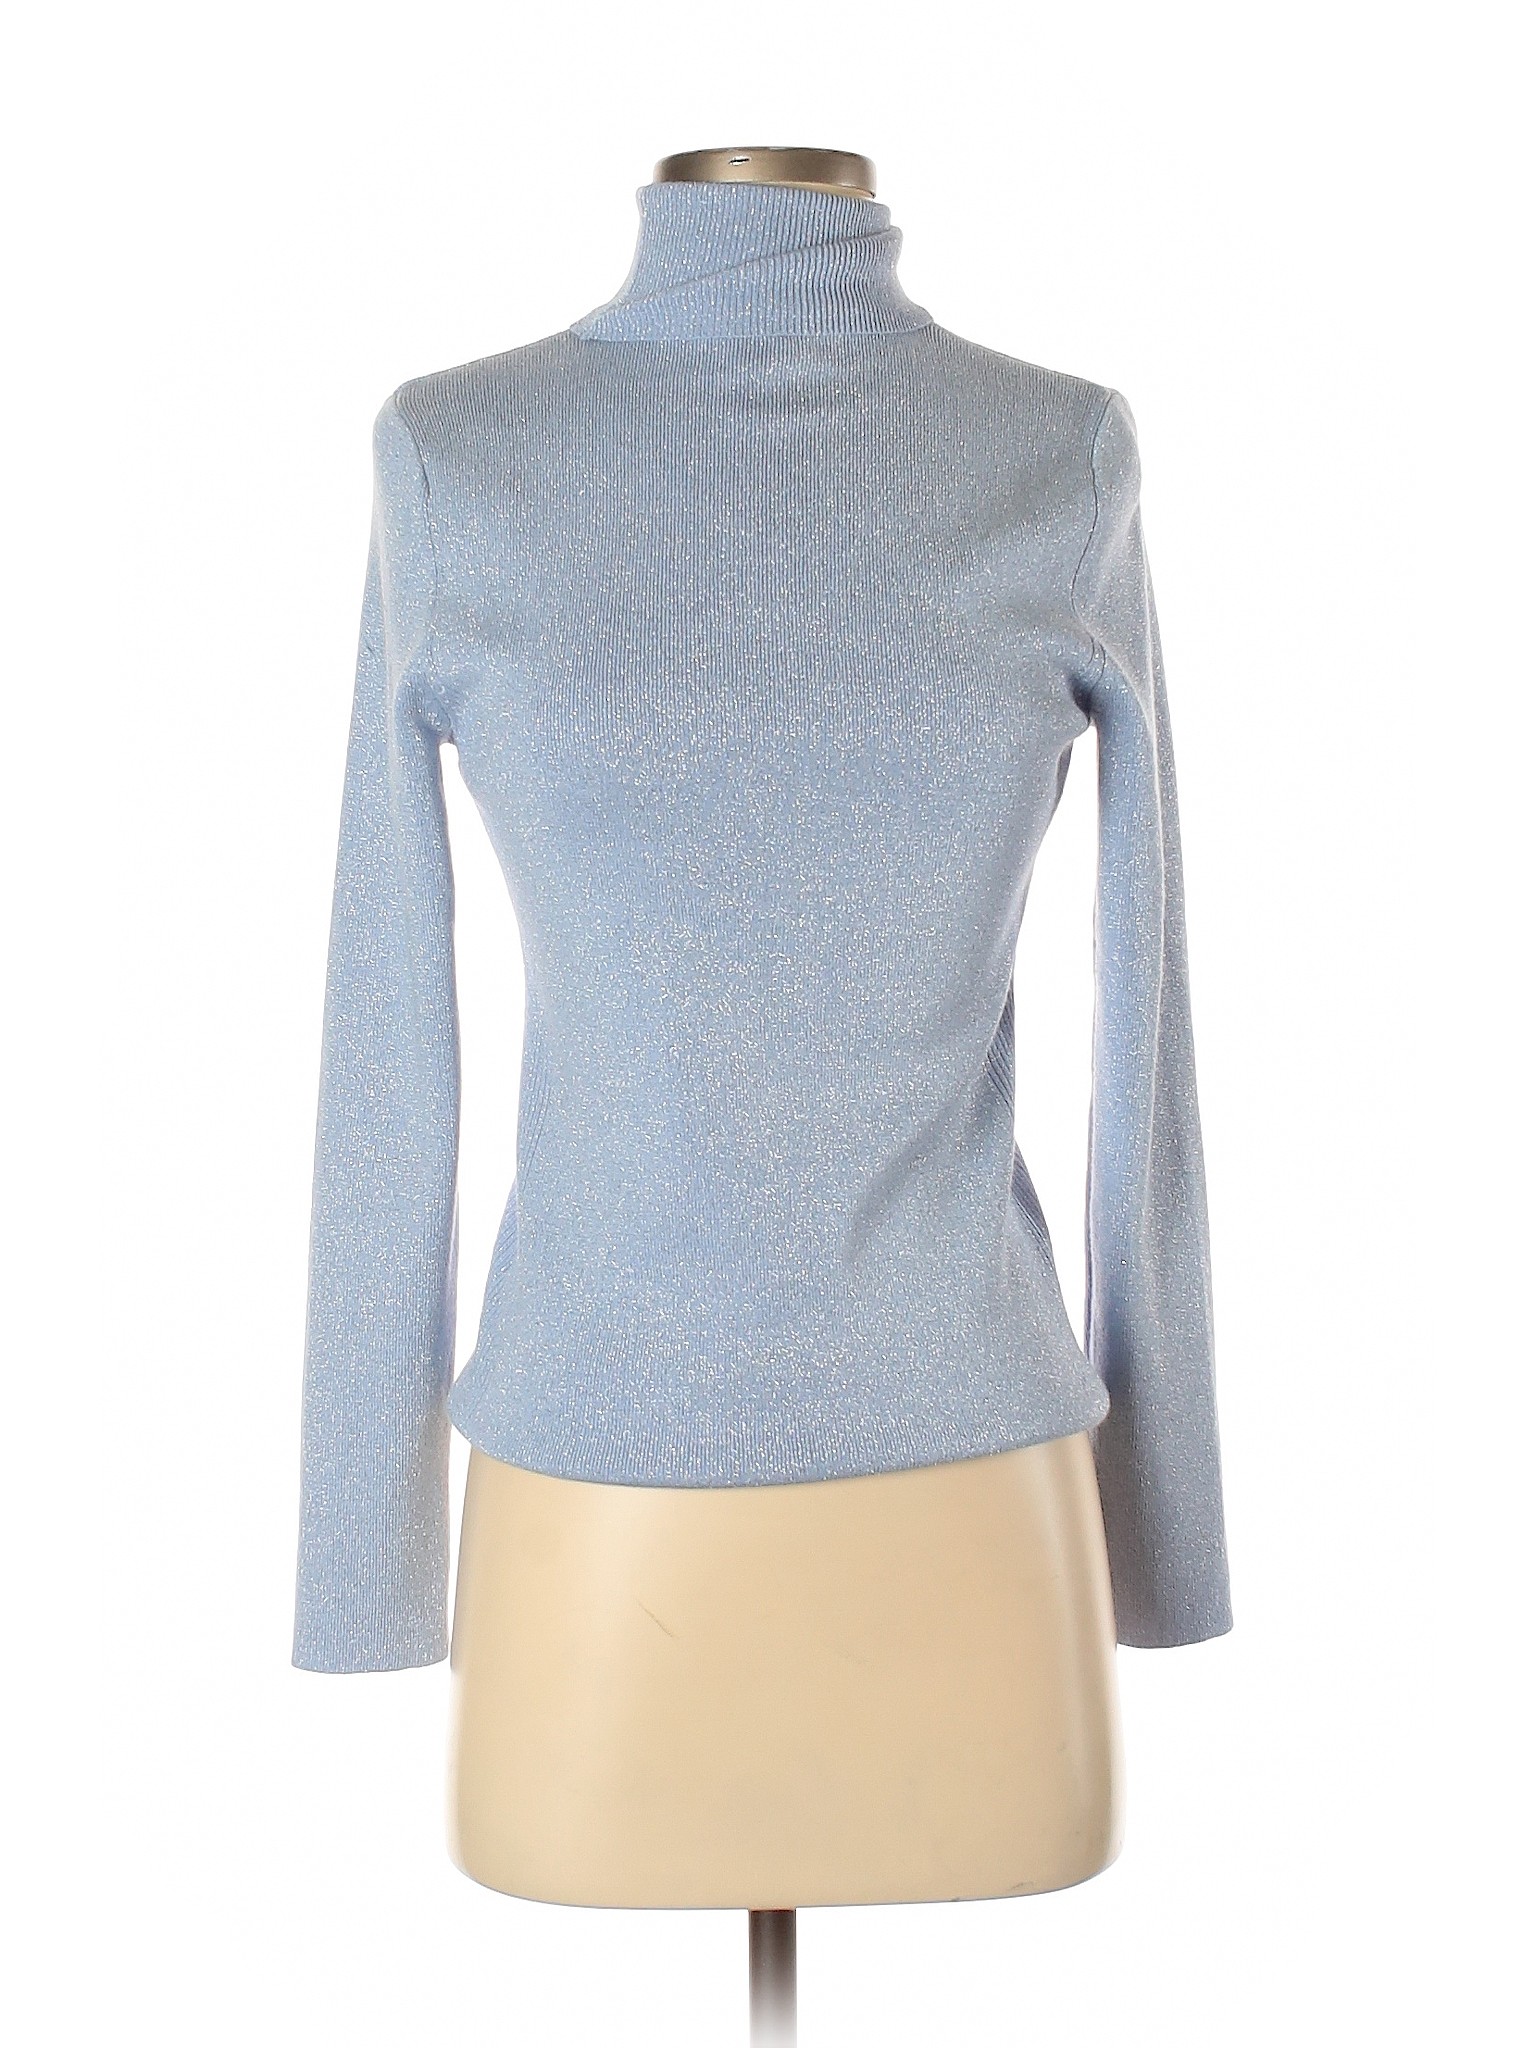 Chico's Color Block Blue Turtleneck Sweater Size Sm (0) - 84% off | thredUP